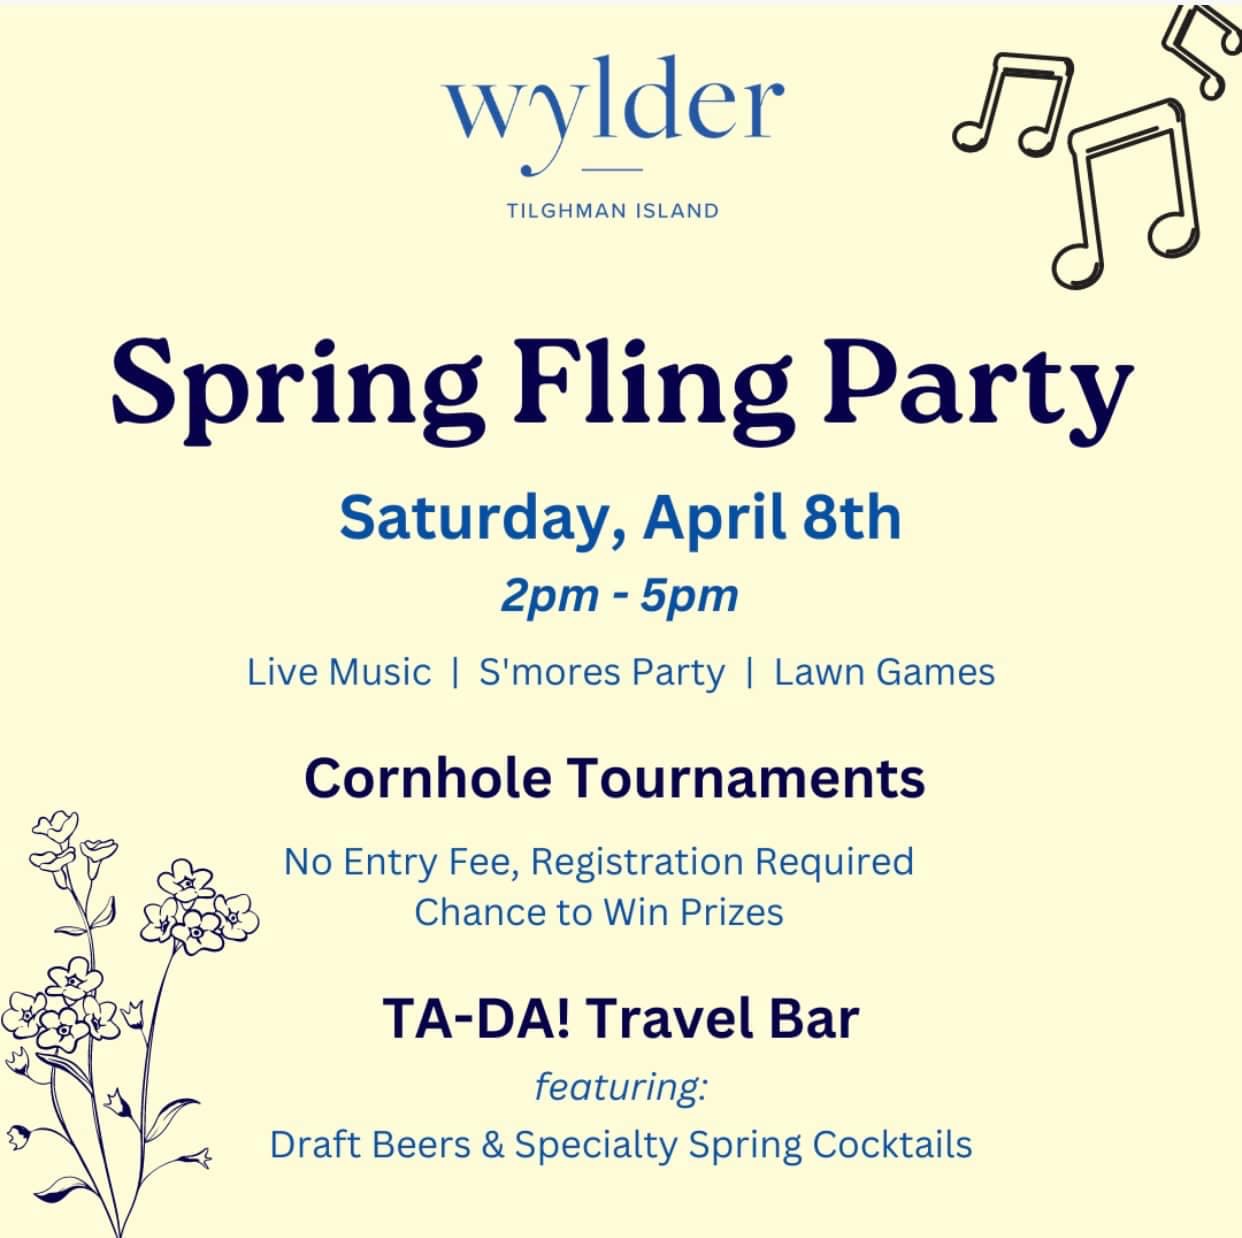 Spring fling party ad | wylder hotels